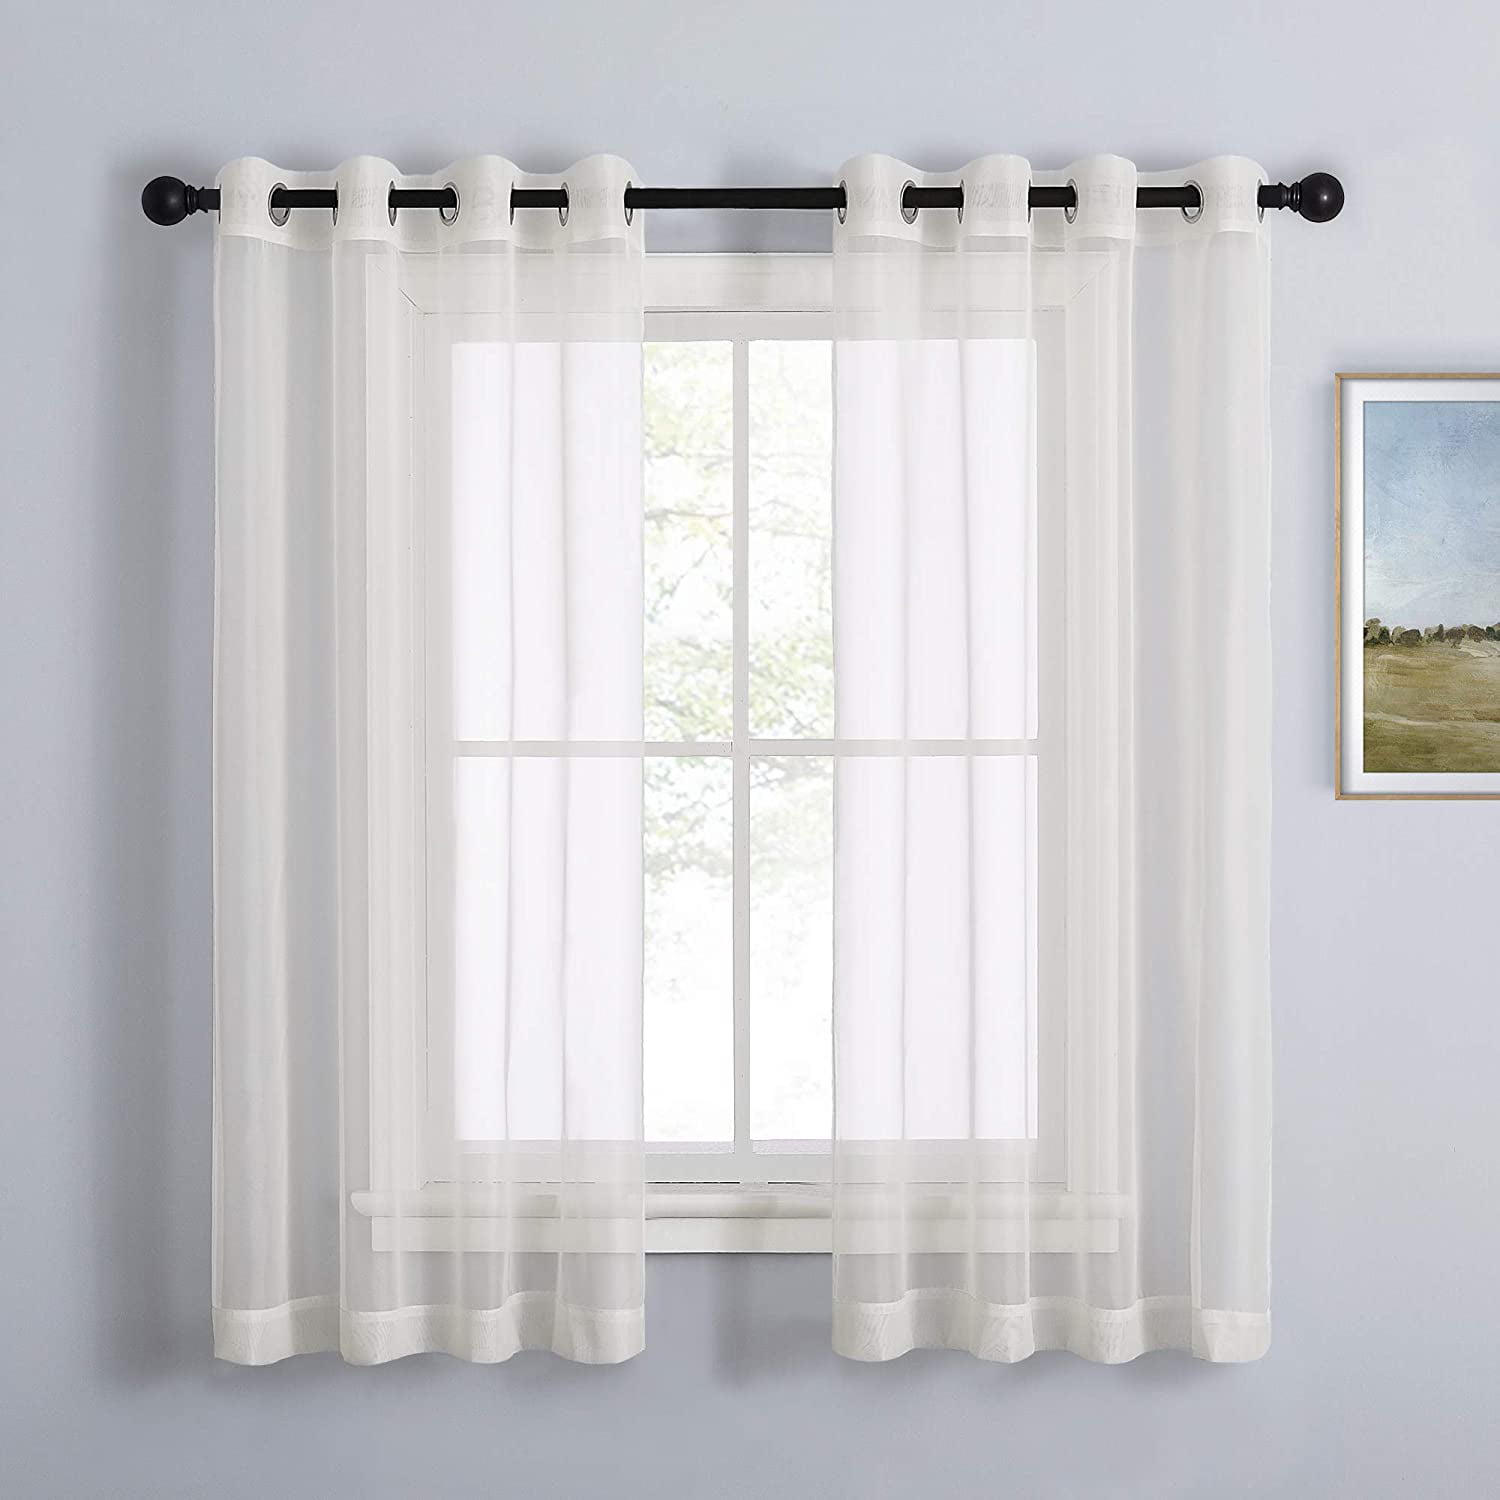 Grommet Living Room Curtain Panels, Sheer White Curtains 63 Long